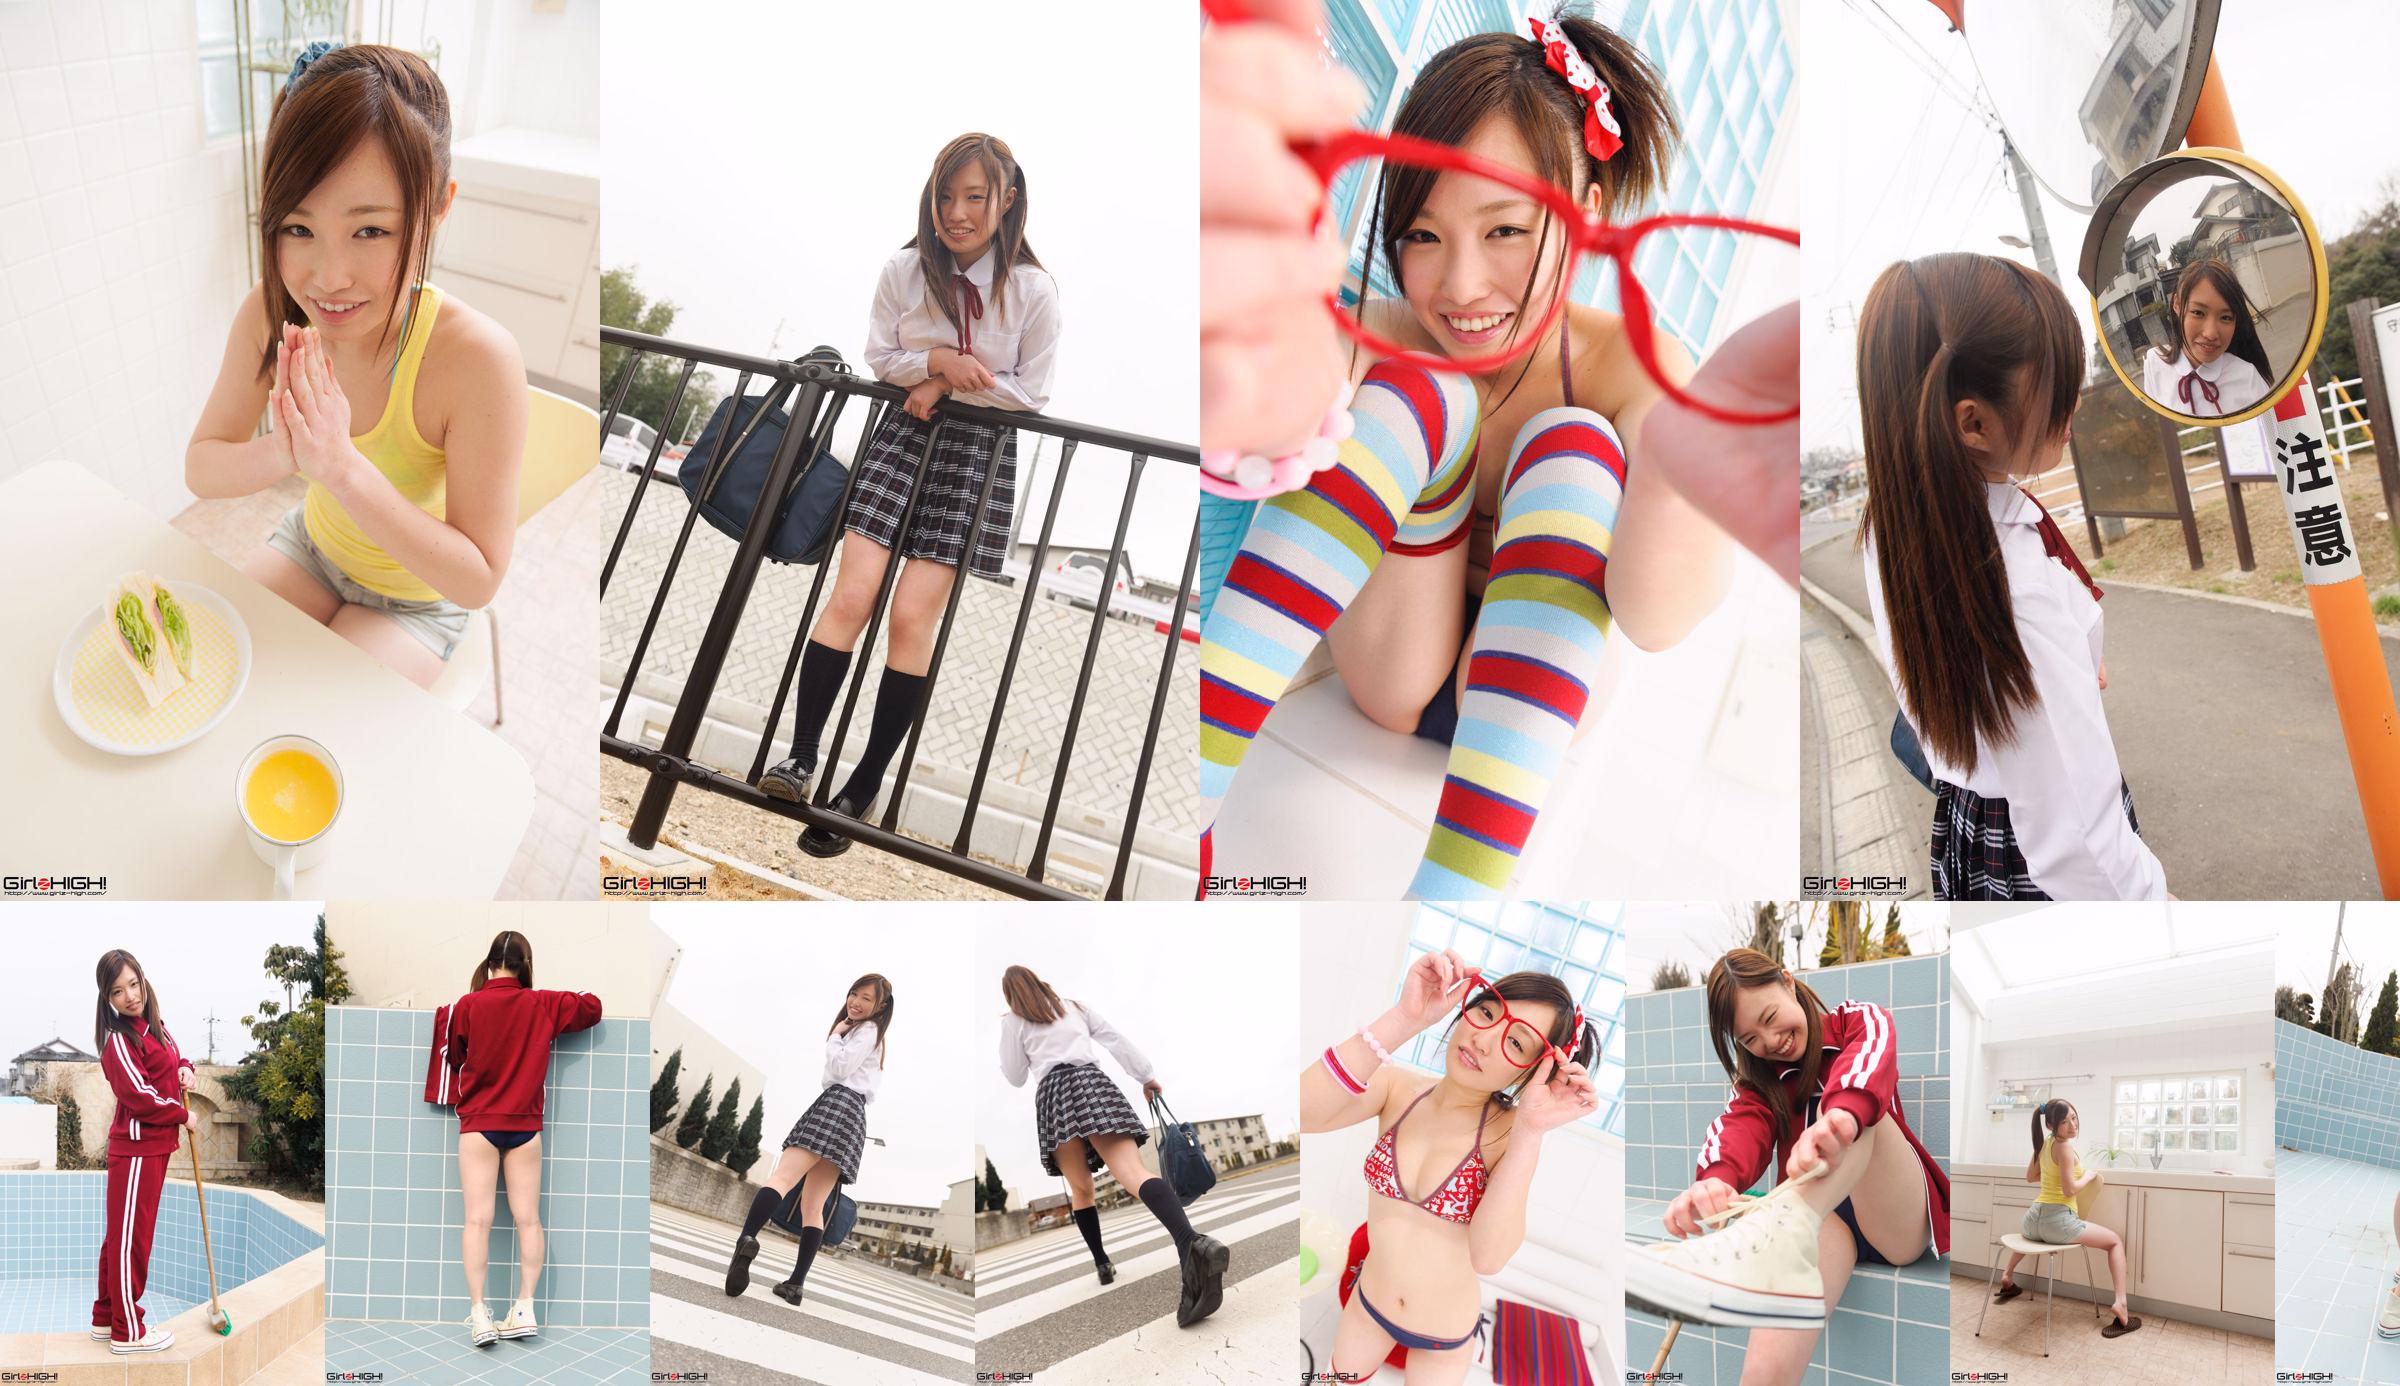 [Girlz-High] Yuno Natsuki Yuno Natsuki / Yuno Natsuki's Gravure Gallery --g023 Photoset 02 No.1b9412 Página 1